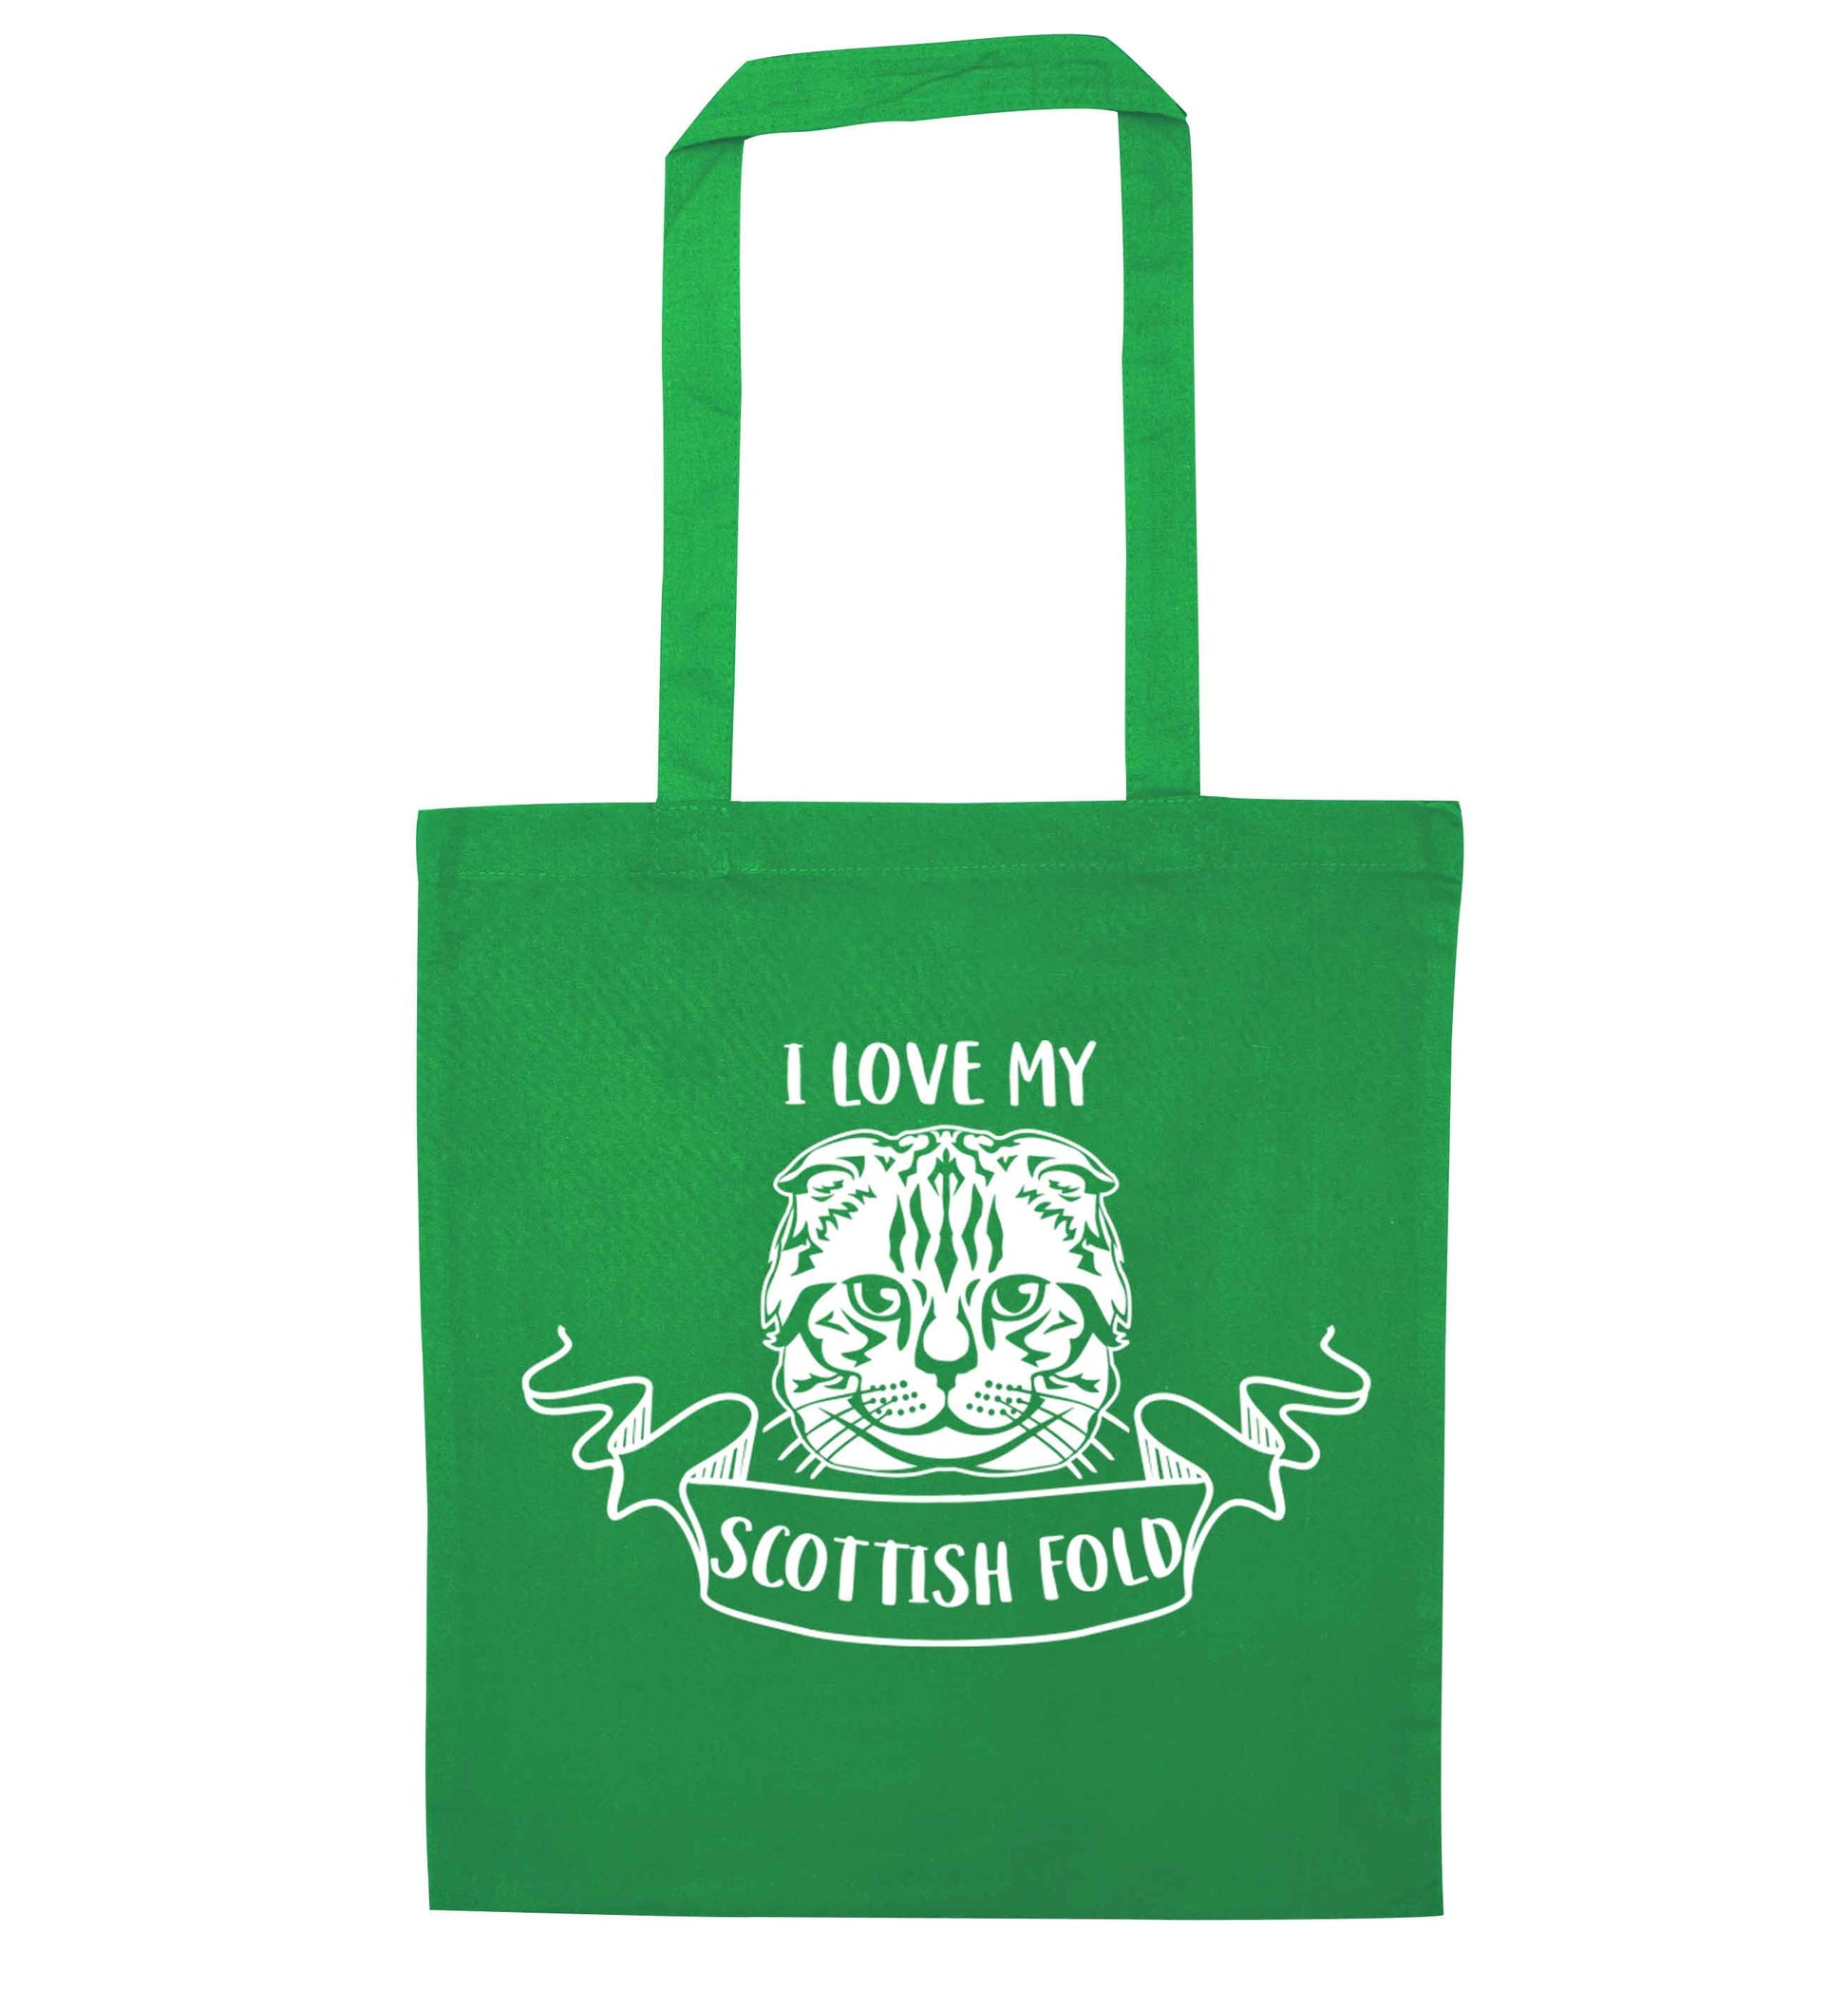 I love my scottish fold cat green tote bag